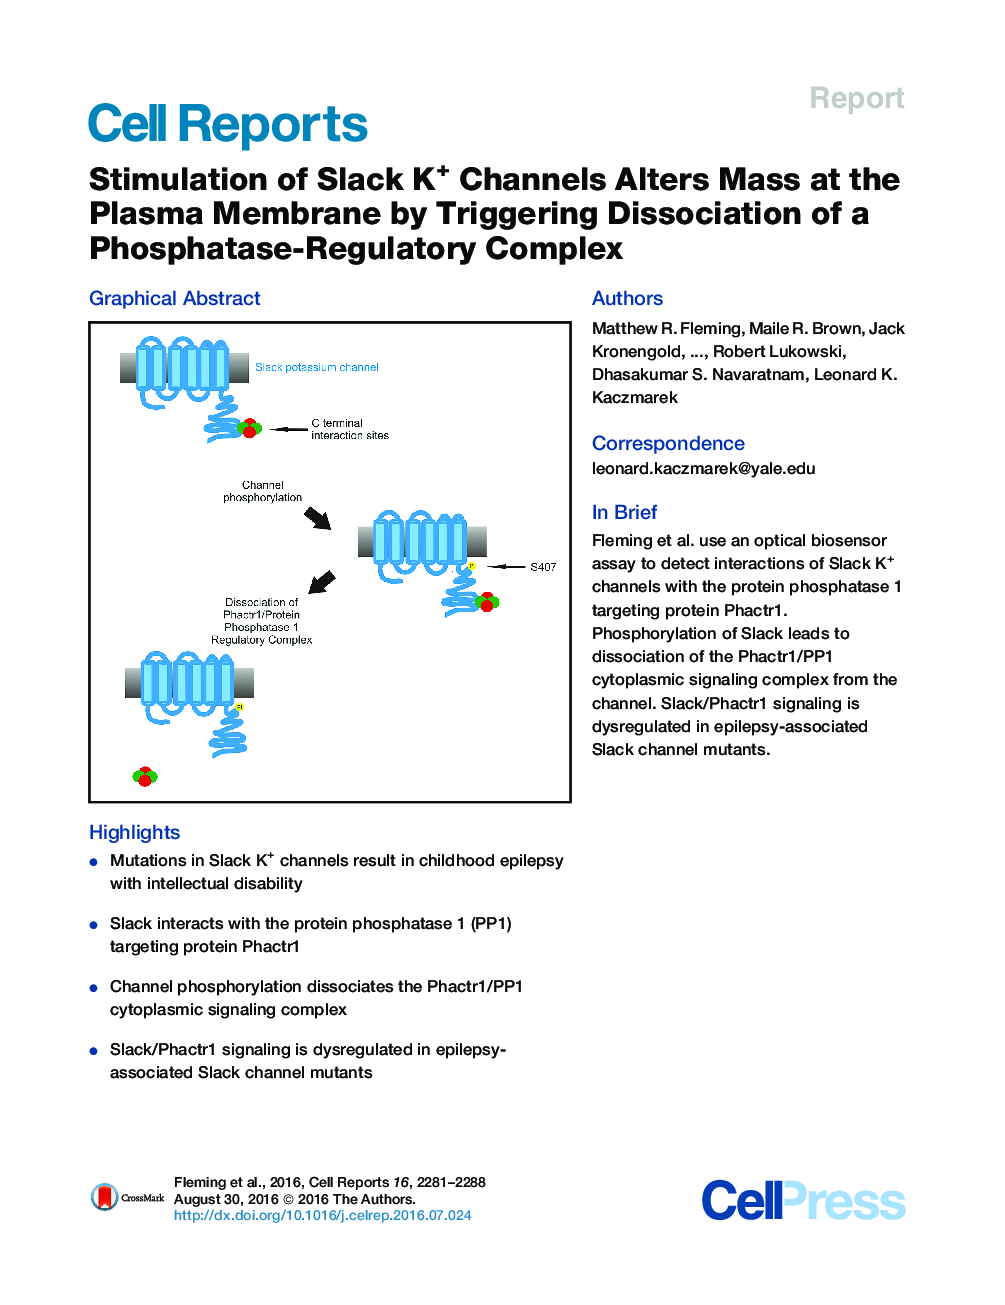 Stimulation of Slack K+ Channels Alters Mass at the Plasma Membrane by Triggering Dissociation of a Phosphatase-Regulatory Complex